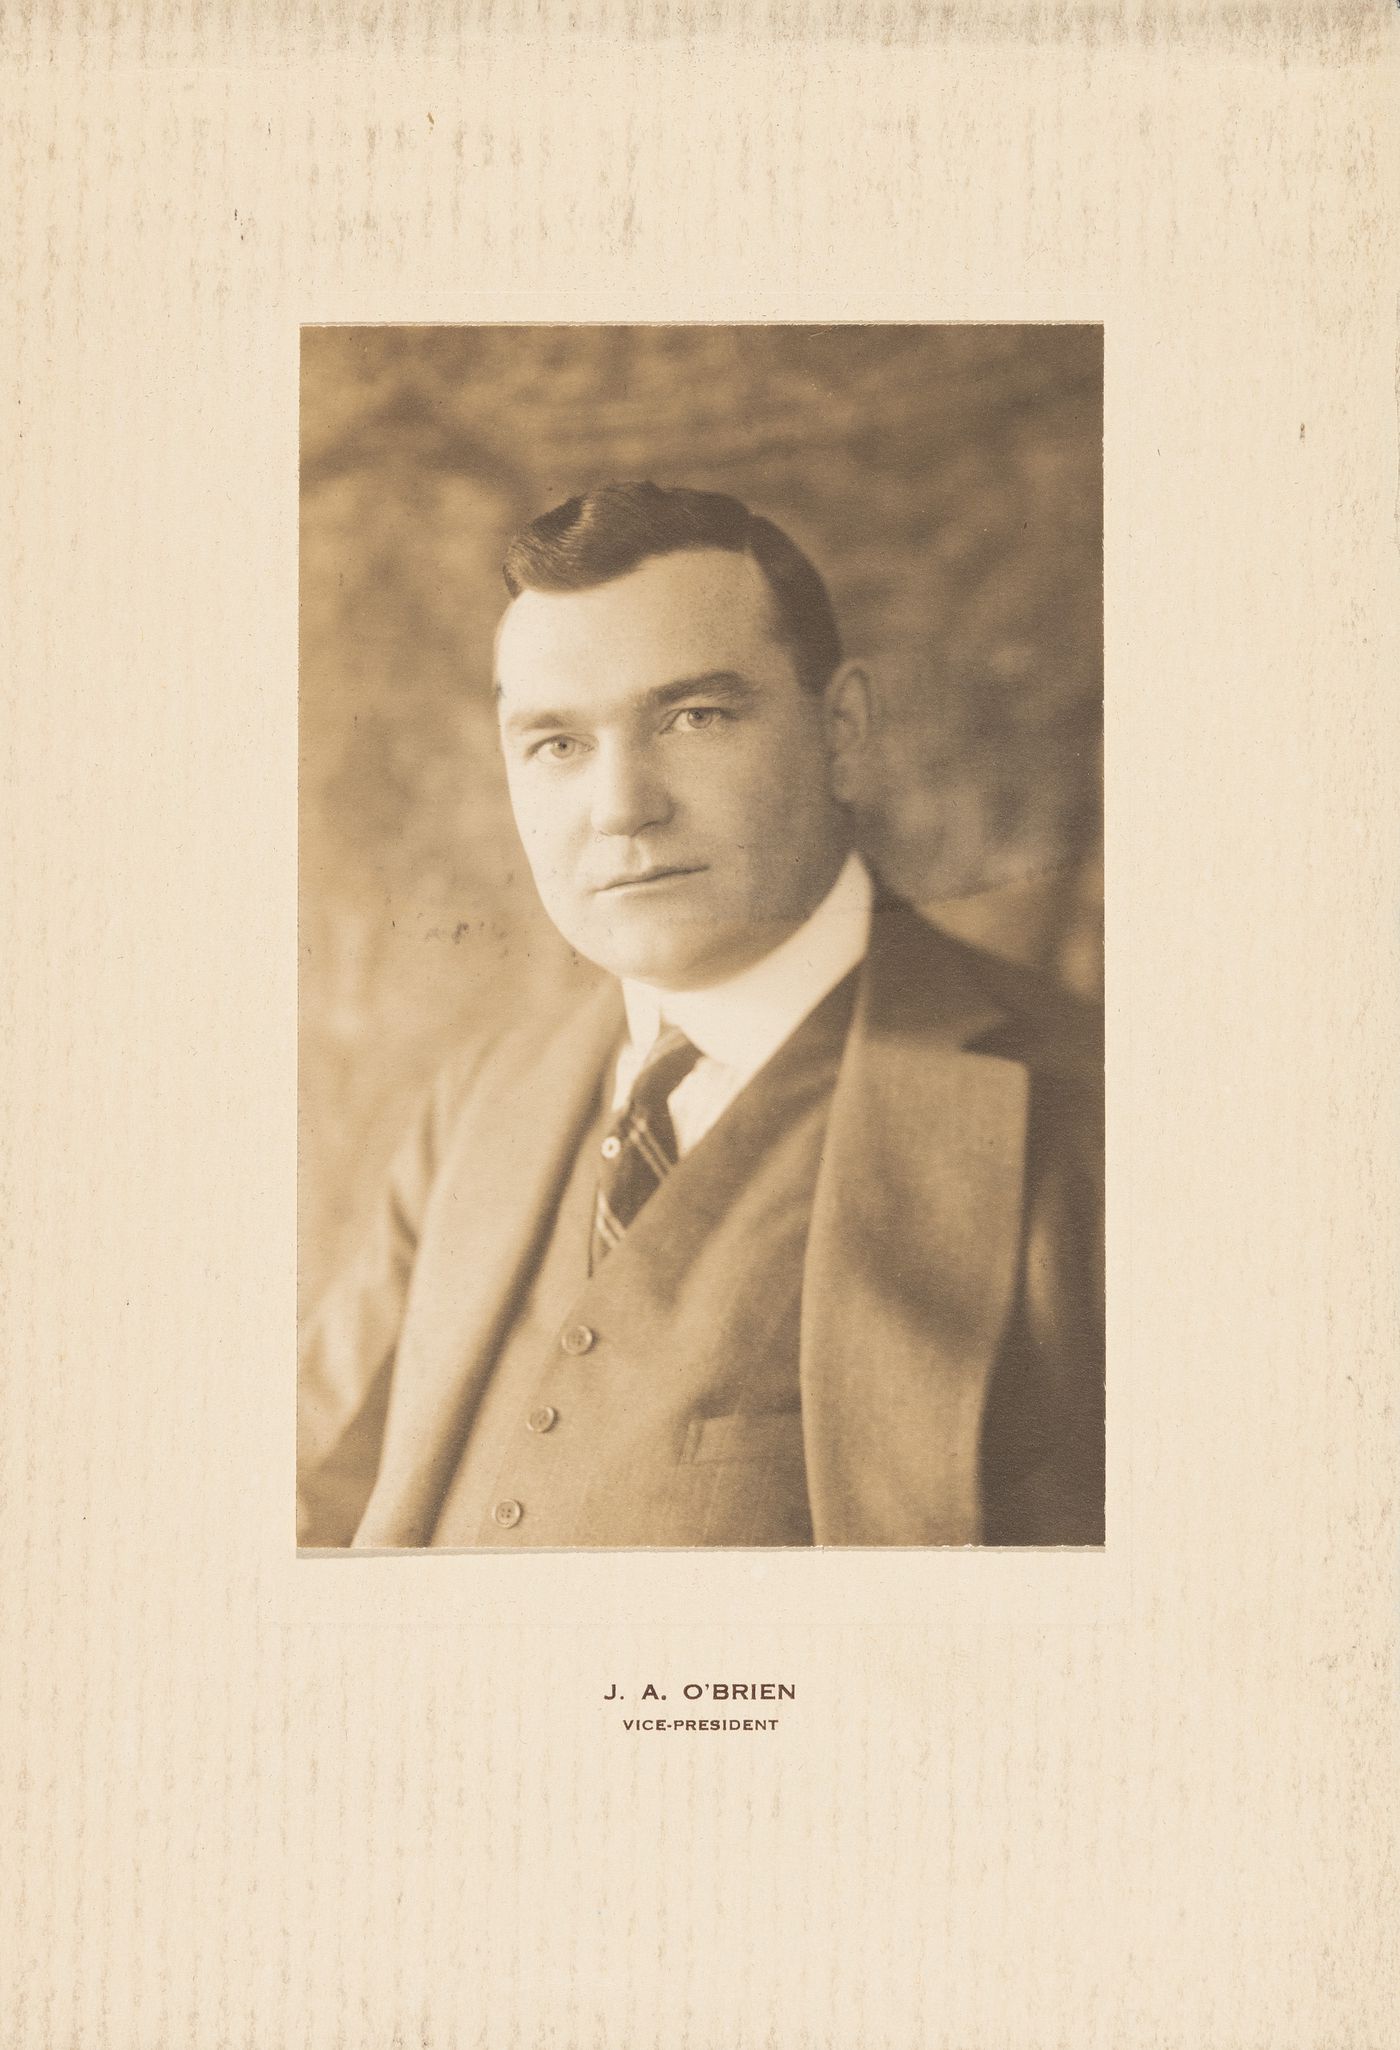 Portrait of J.A. O'Brien, Vice-president, Energite Explosives Company